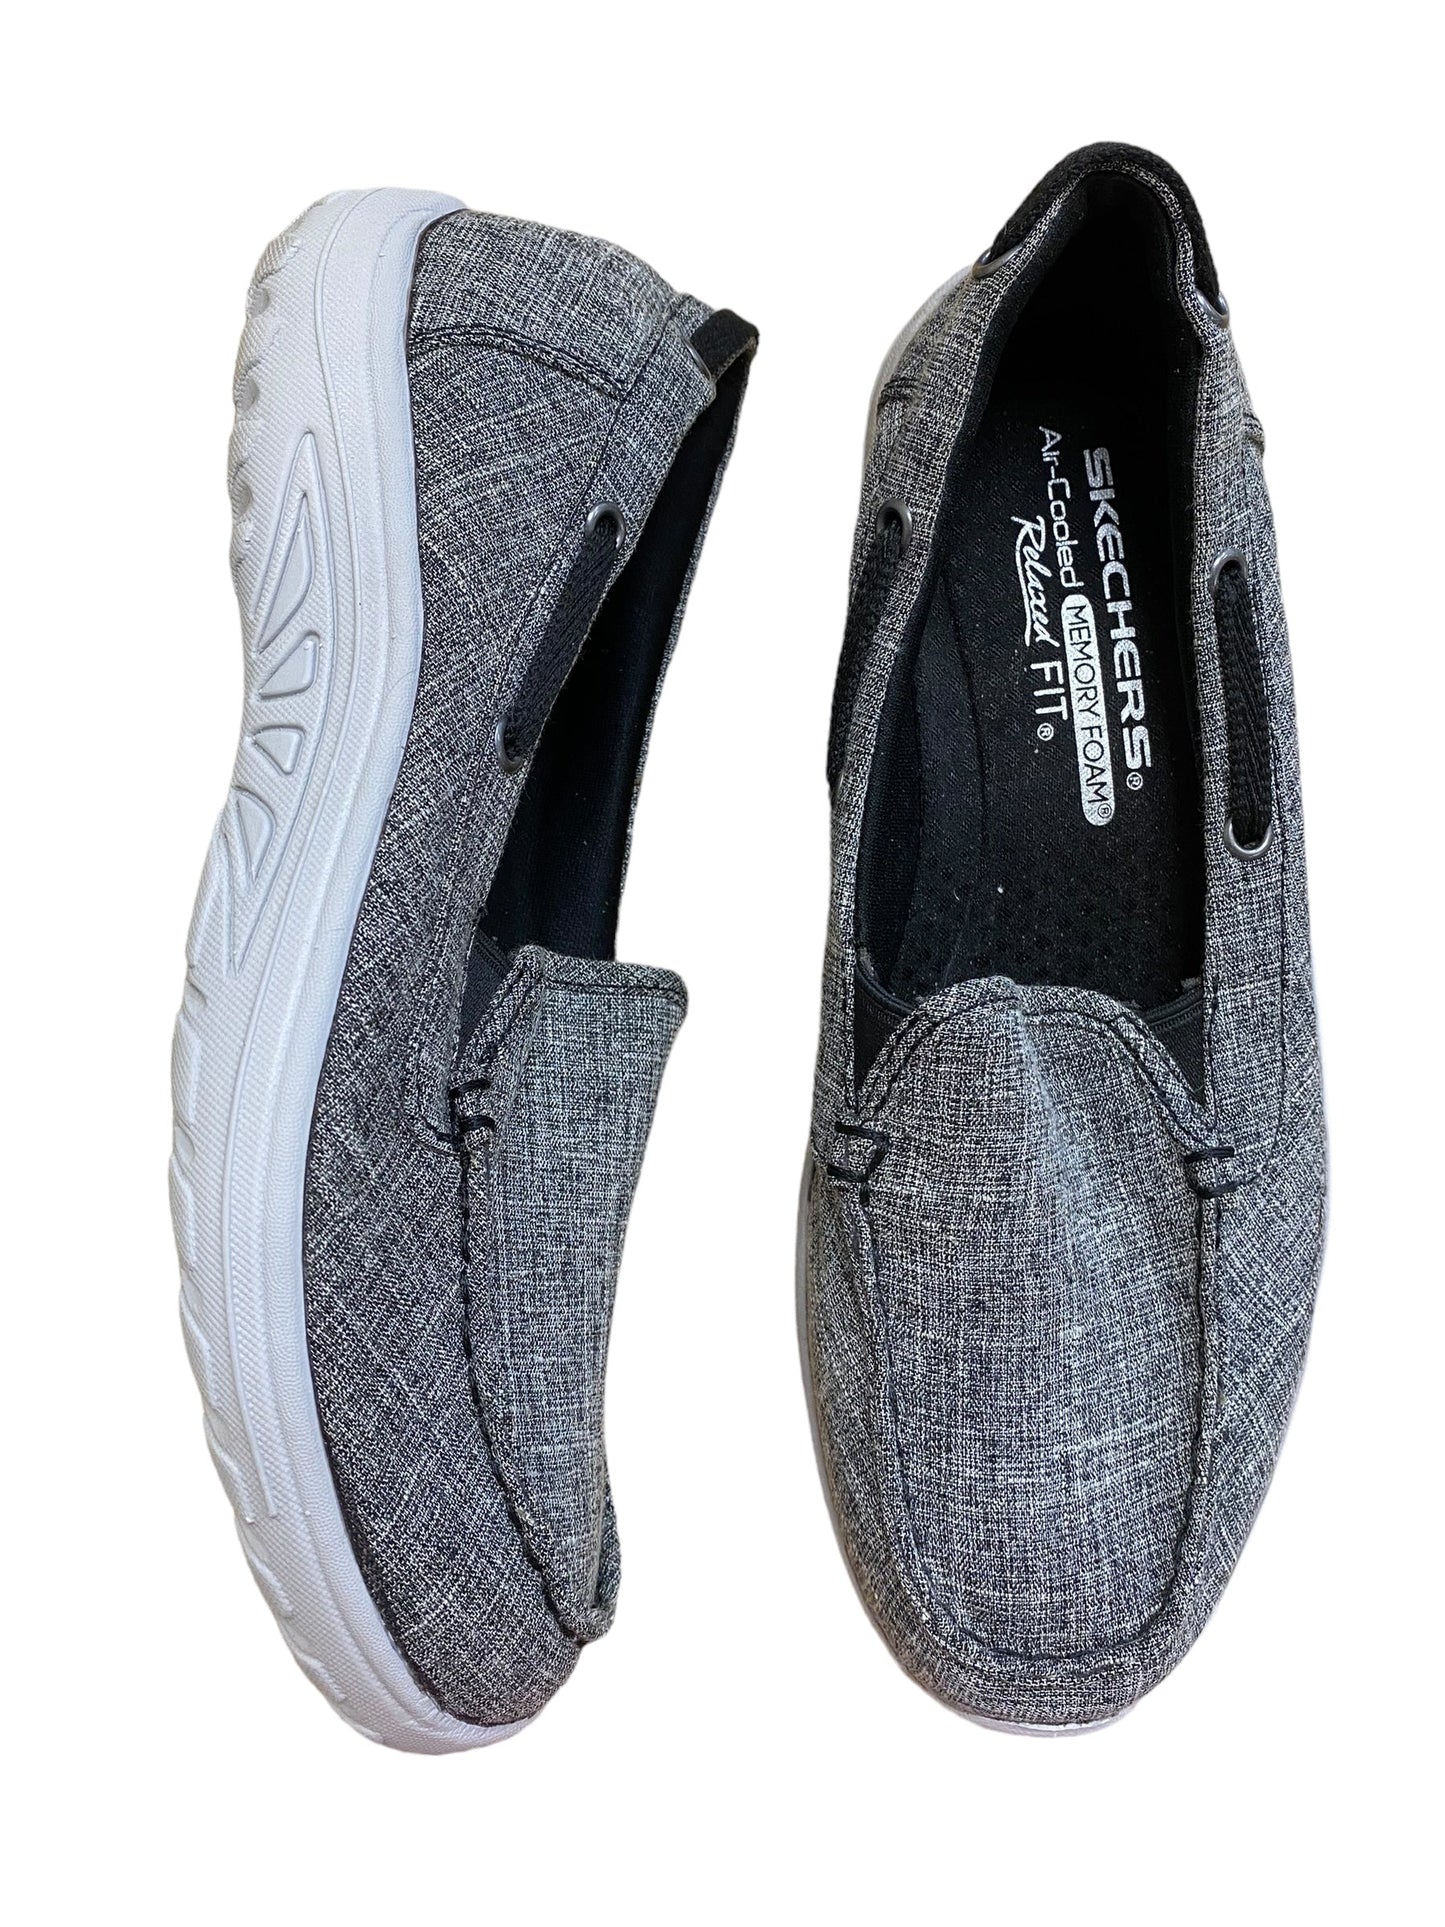 Grey Shoes Flats Skechers, Size 7